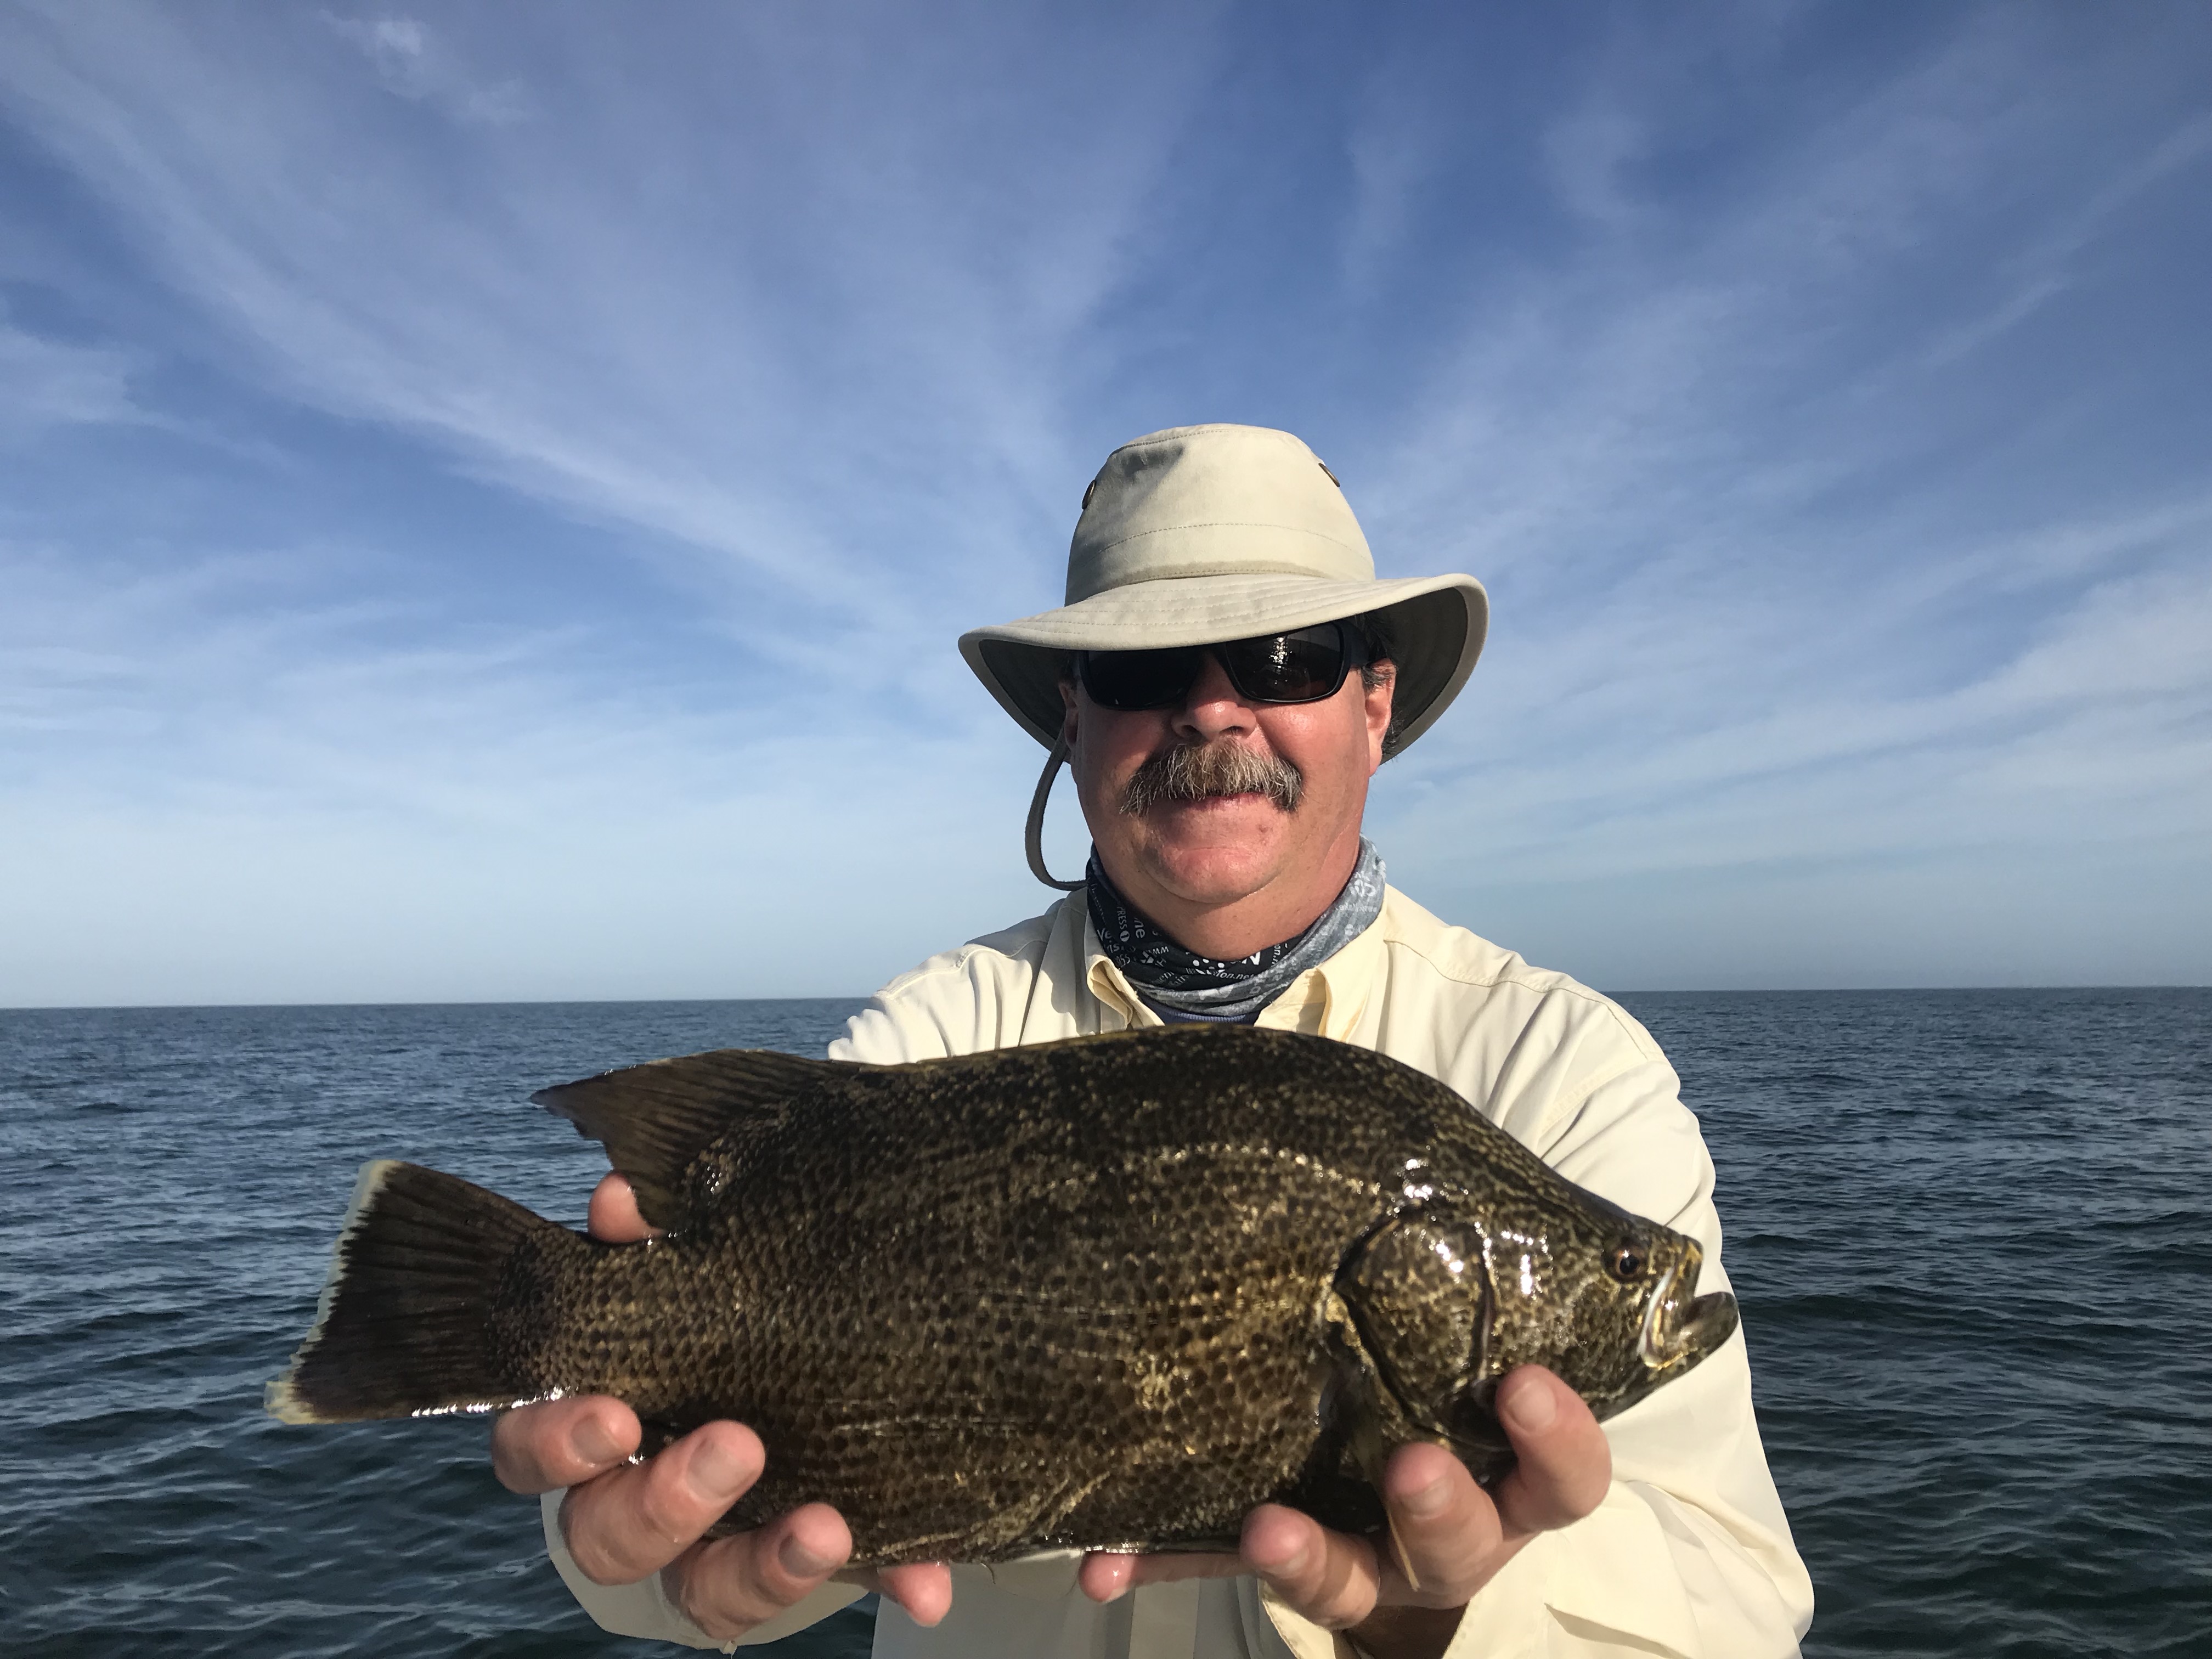 Bruce Knutson of Helena, Montana holding a Triple Tail fish